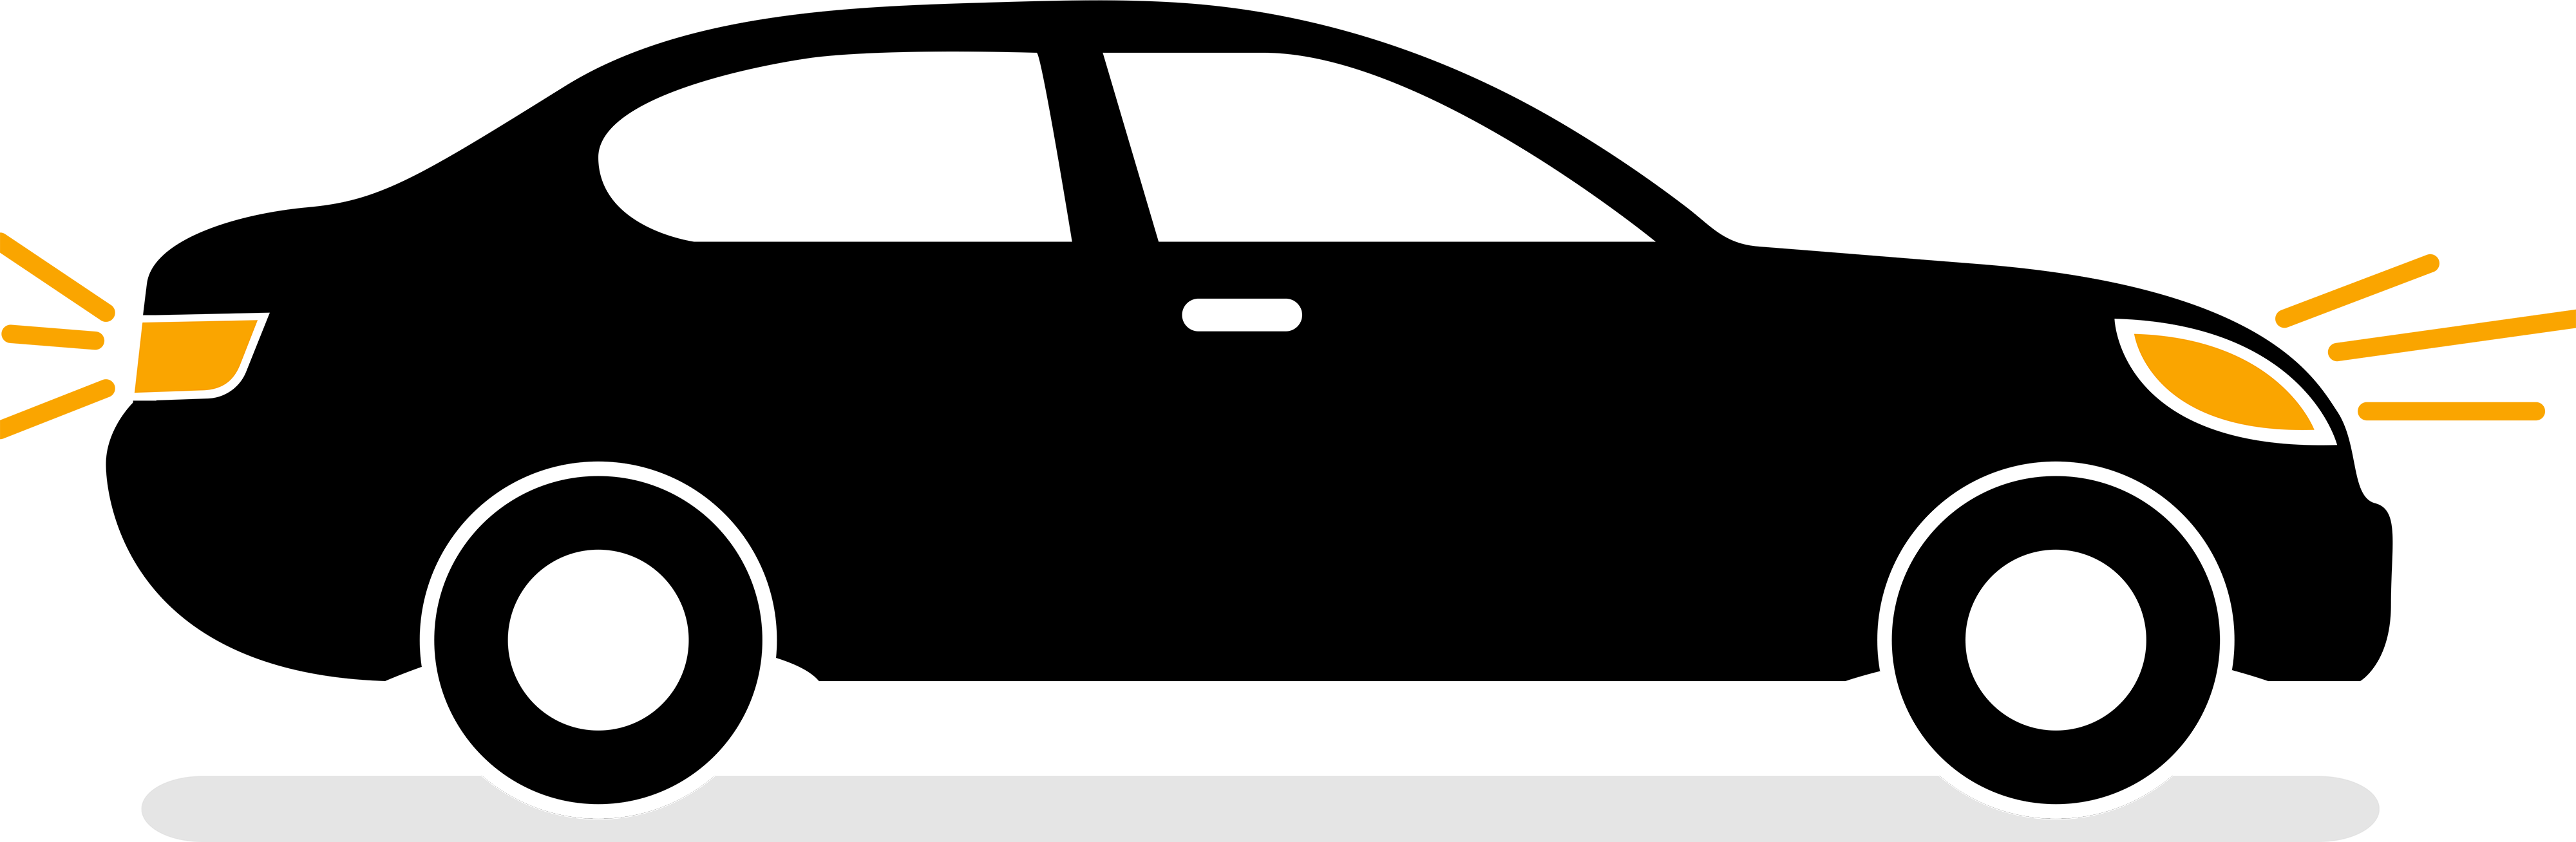 Car illustration 